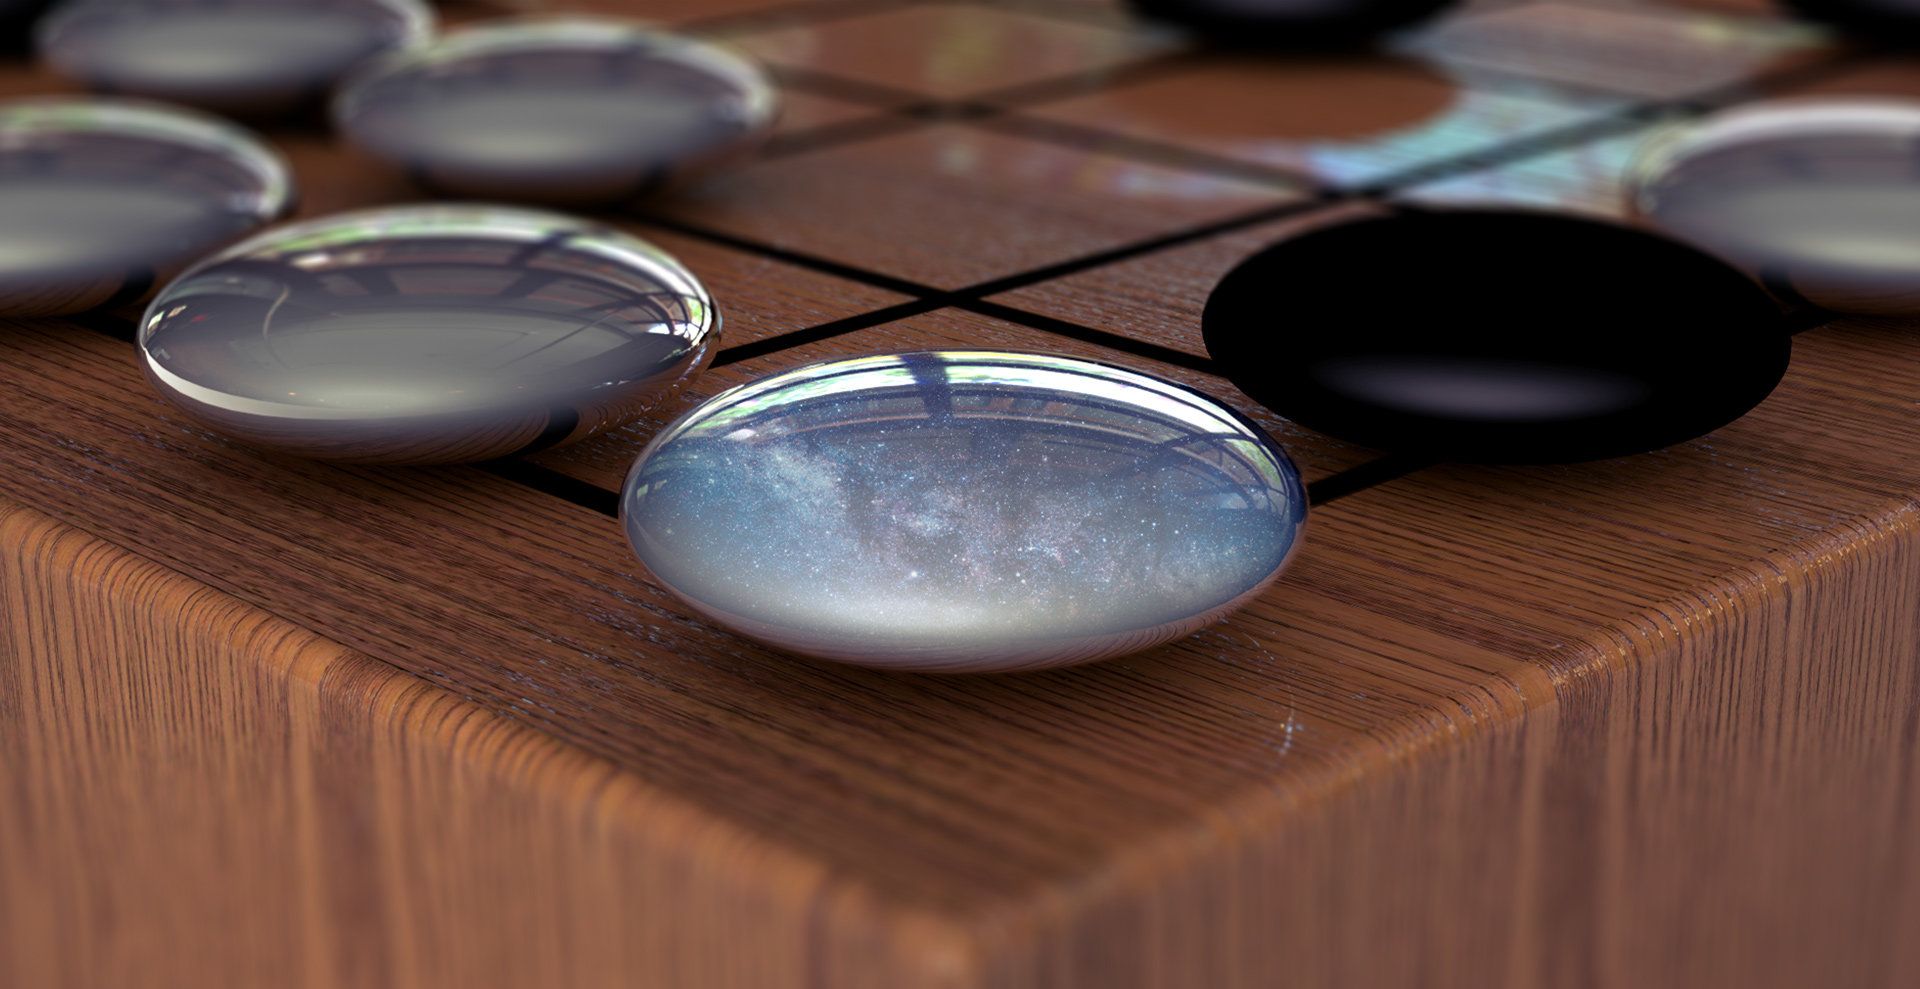 Artificial intelligence AlphaGo became fully samebecause